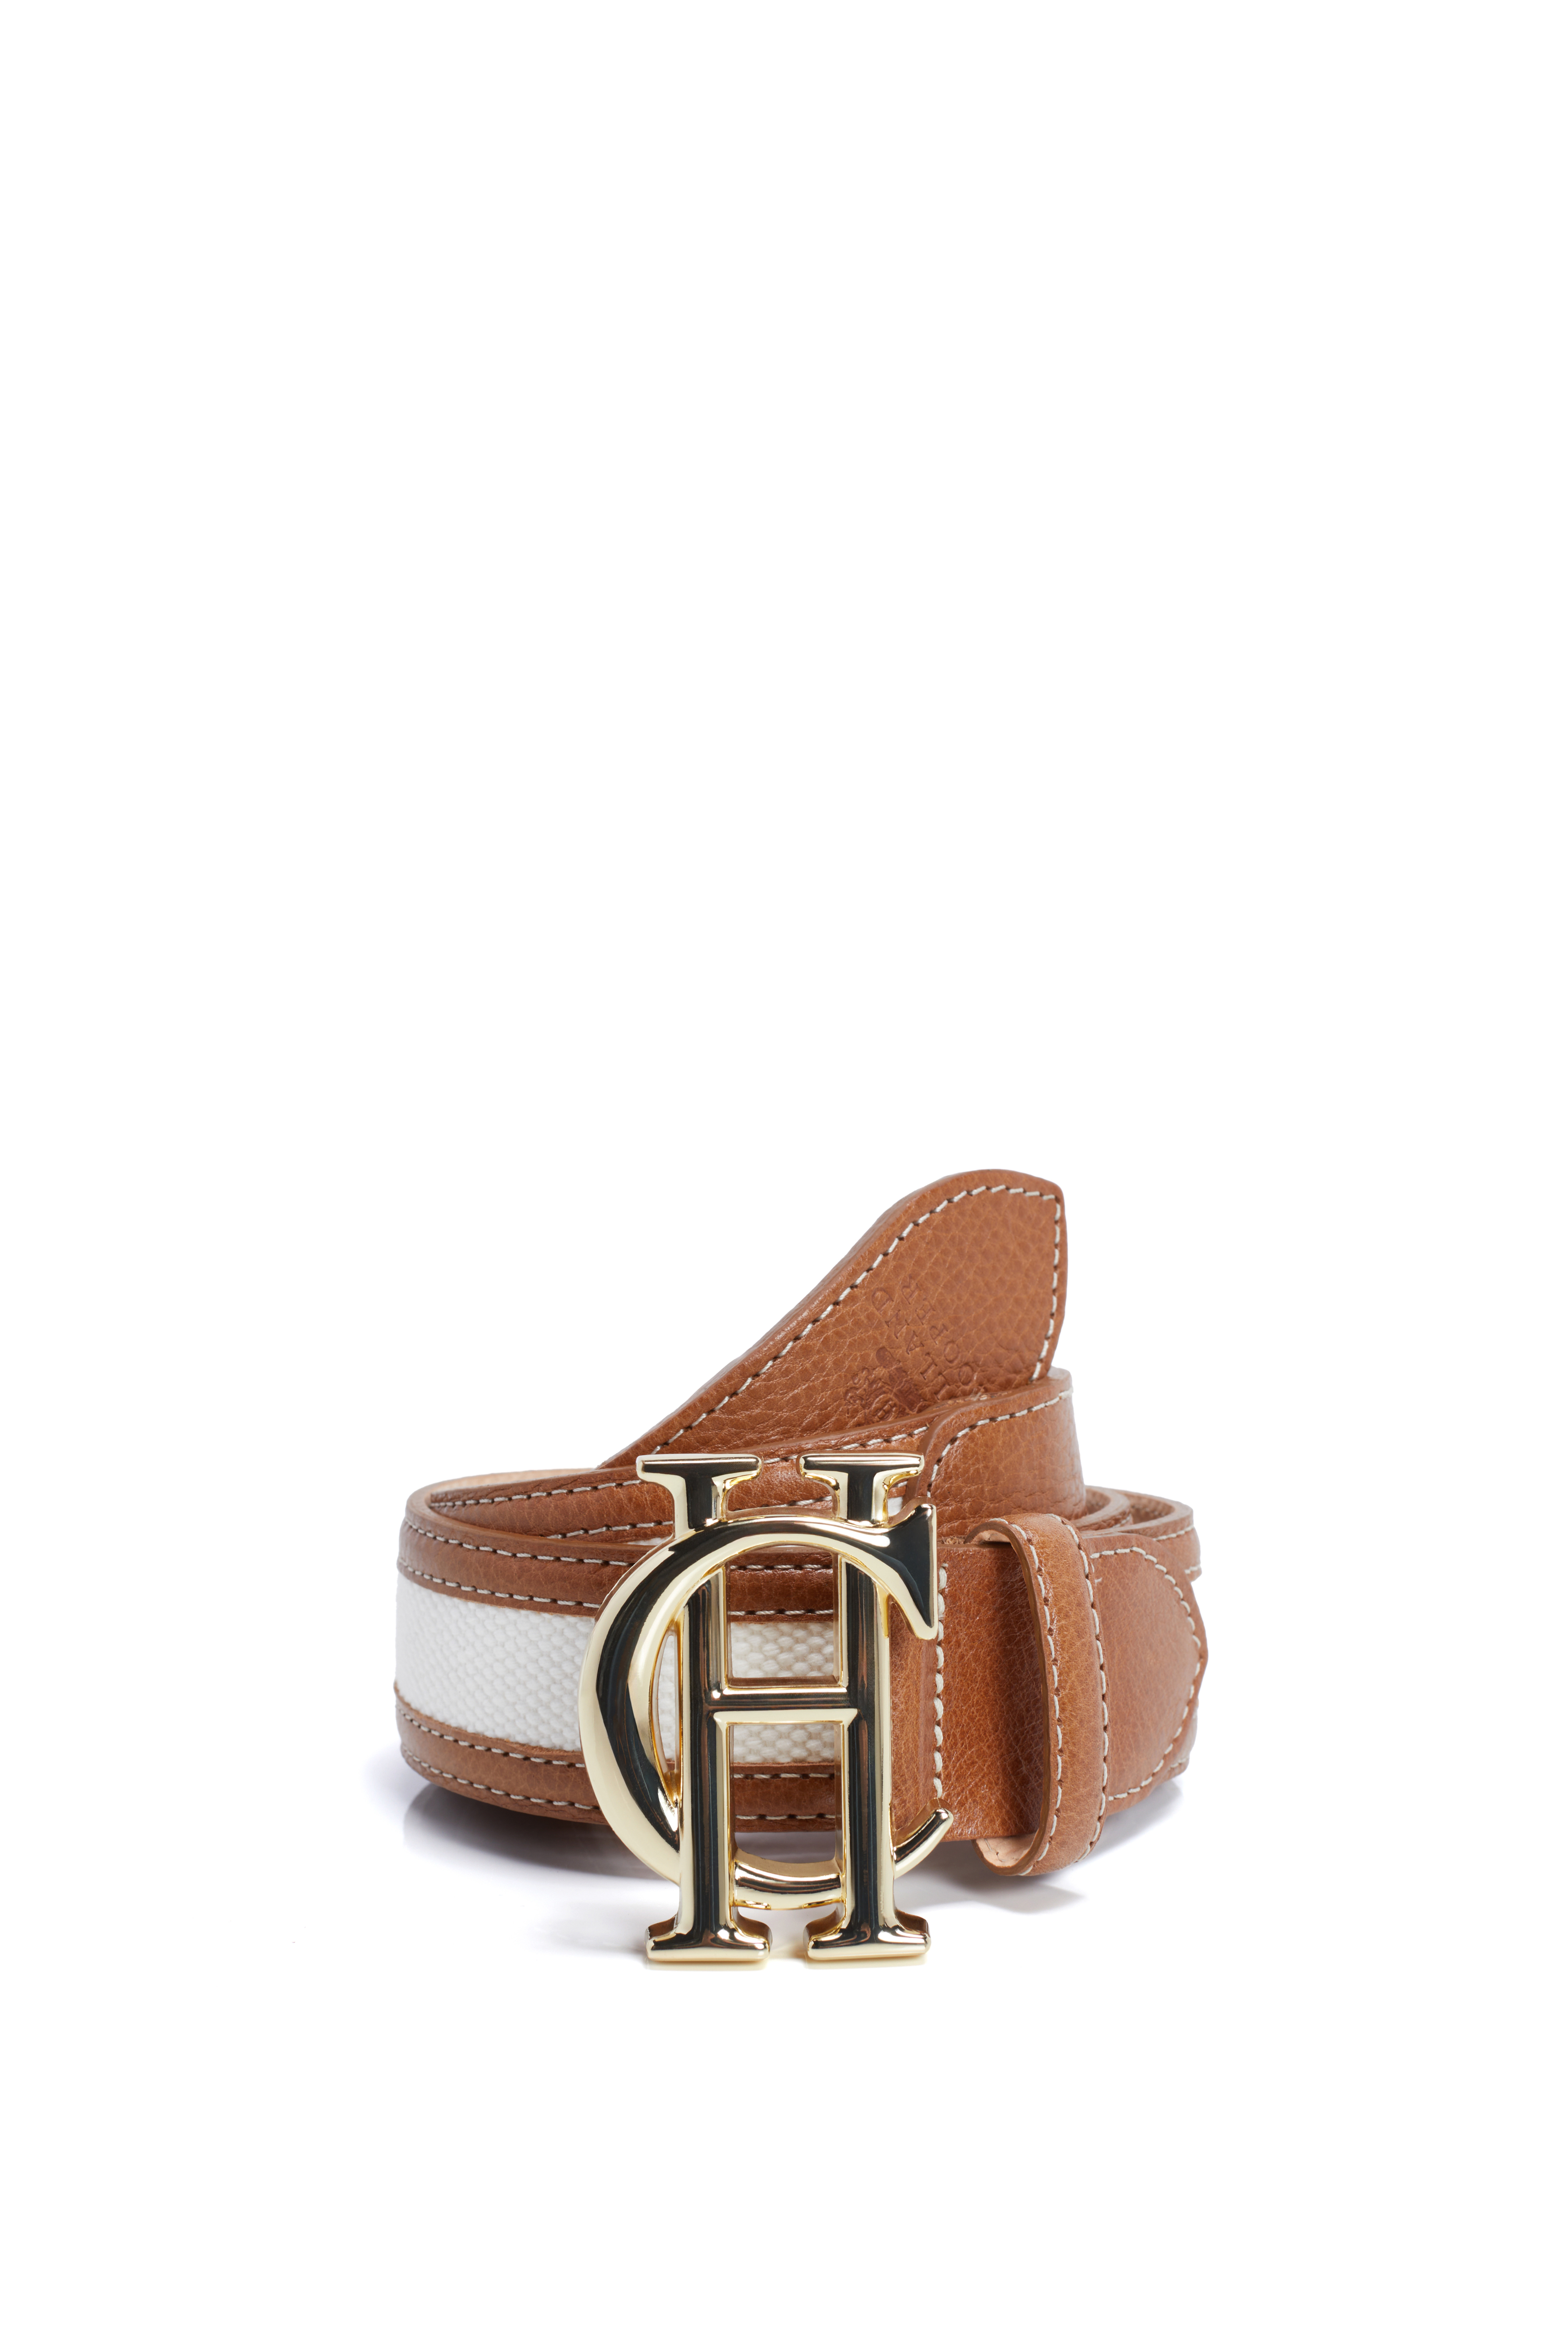 Ferragamo Gancini Reversible Belt & Cognac Boots - Stylish Petite